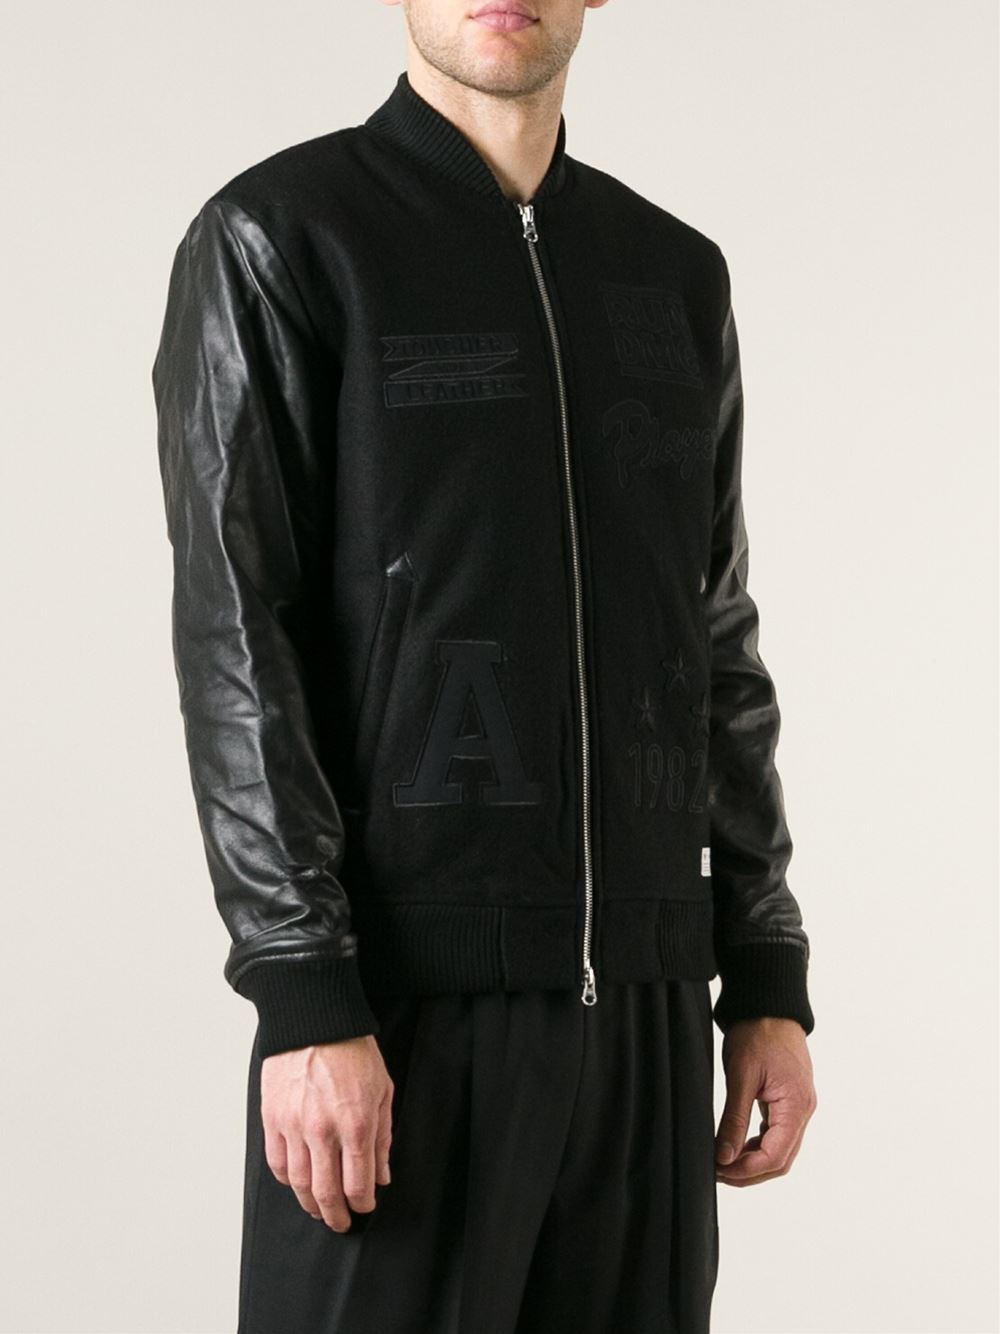 adidas Leather Sleeve Varsity Bomber Jacket in Black for Men - Lyst